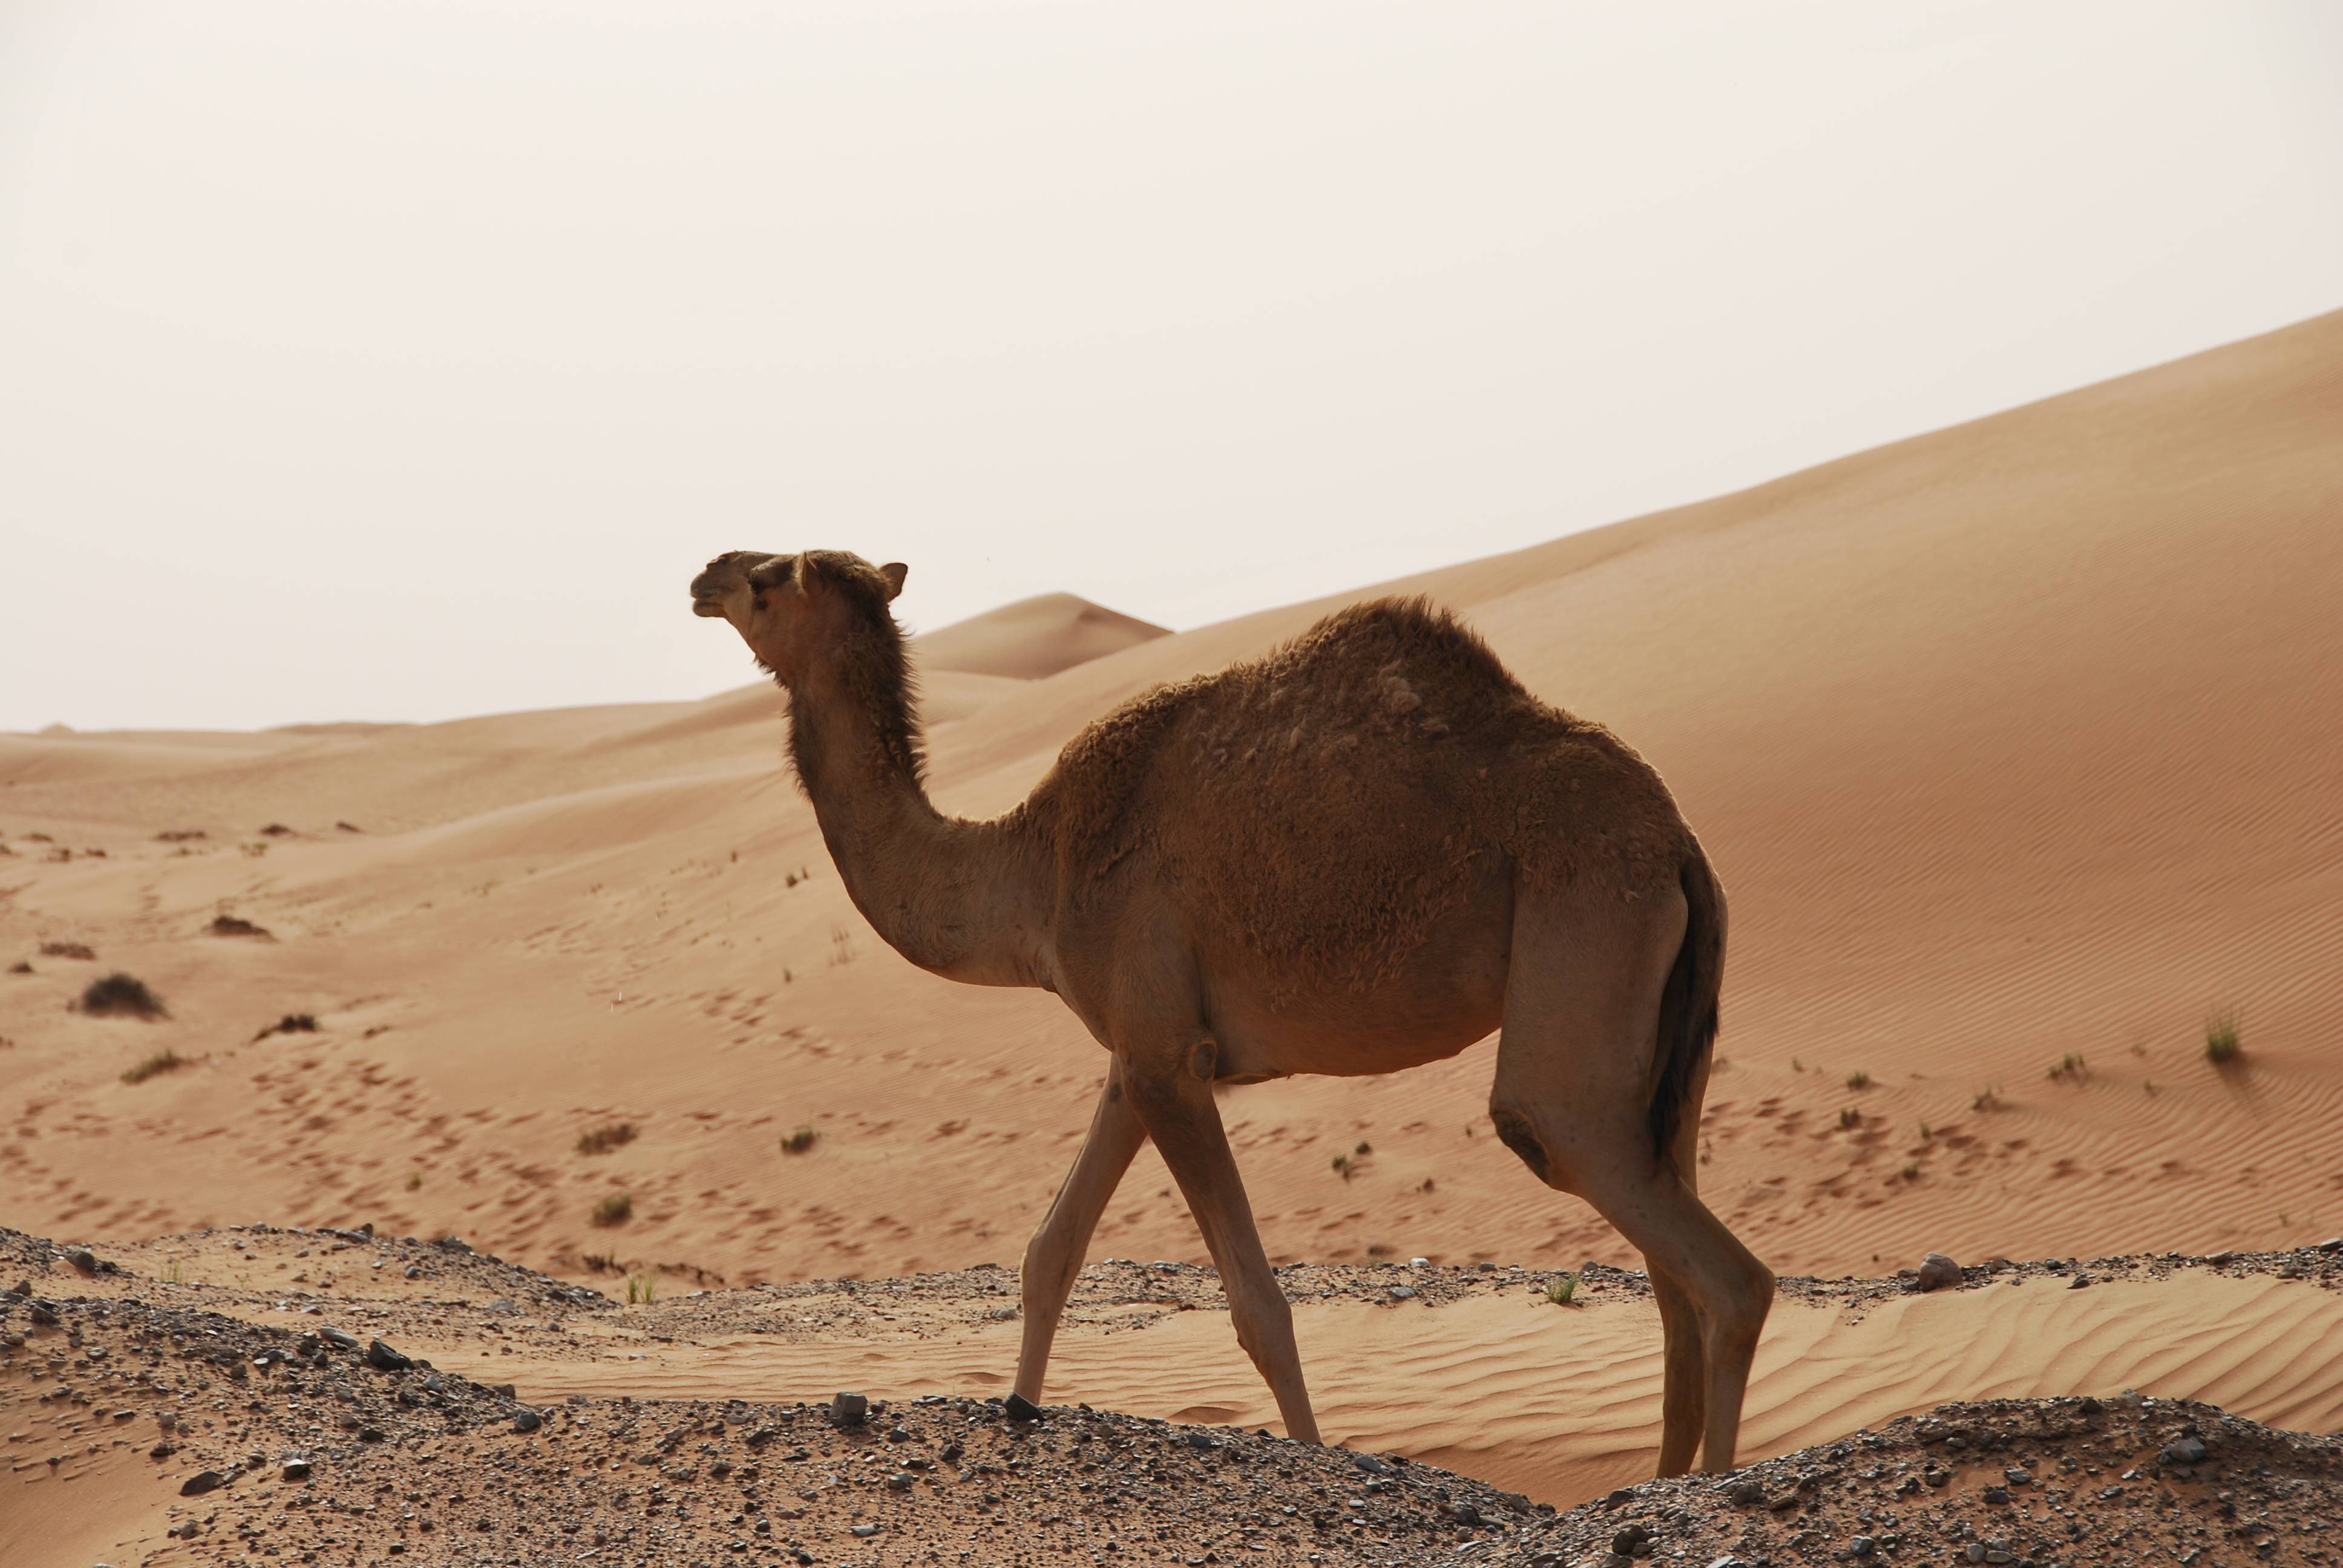 Camel HD Desktop Wallpaper. Camel Picture, Image